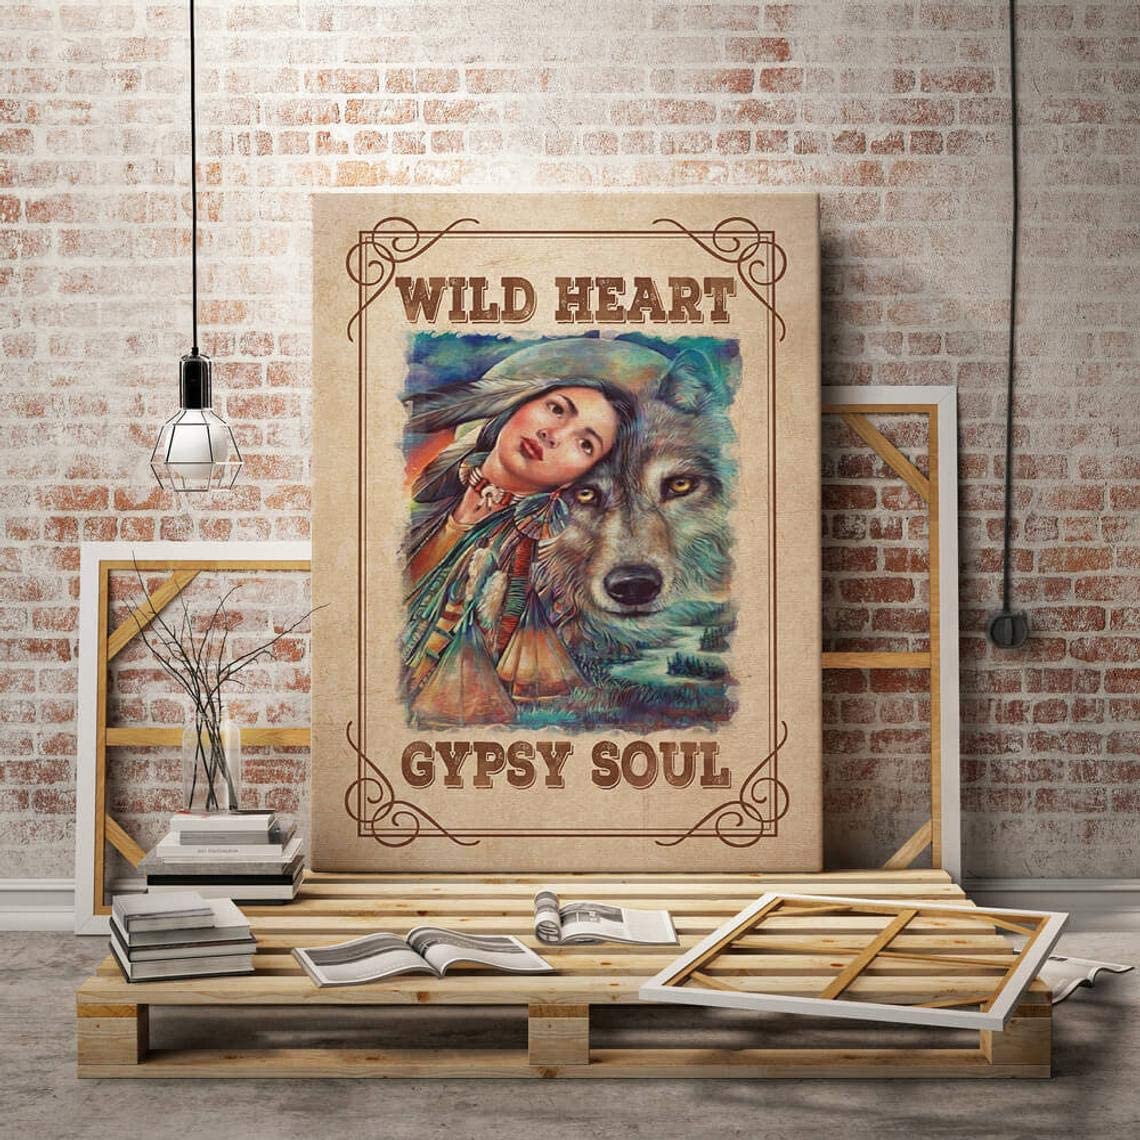 Wild Heart Gypsy Soul Boho Girl Gallery T Idea Poster Poster Art Design 1615